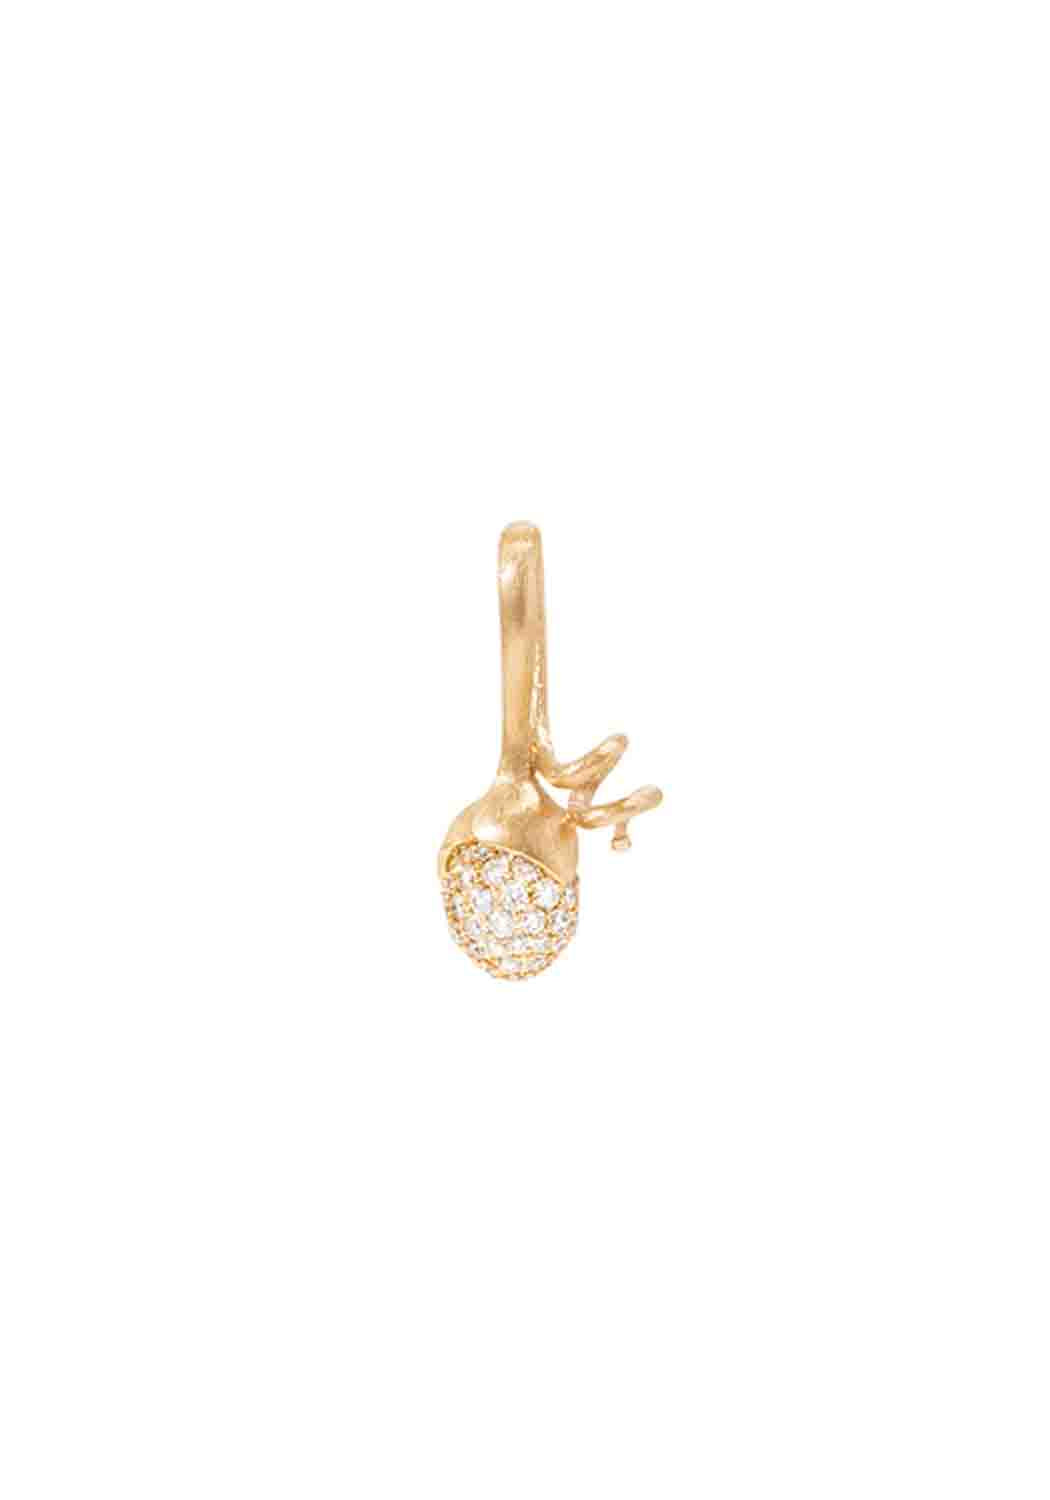 OLE LYNGGAARD Lotus Sprout 18KYG Pavé Diamond Pendant | Ref. A2663-402 | OsterJewelers.com